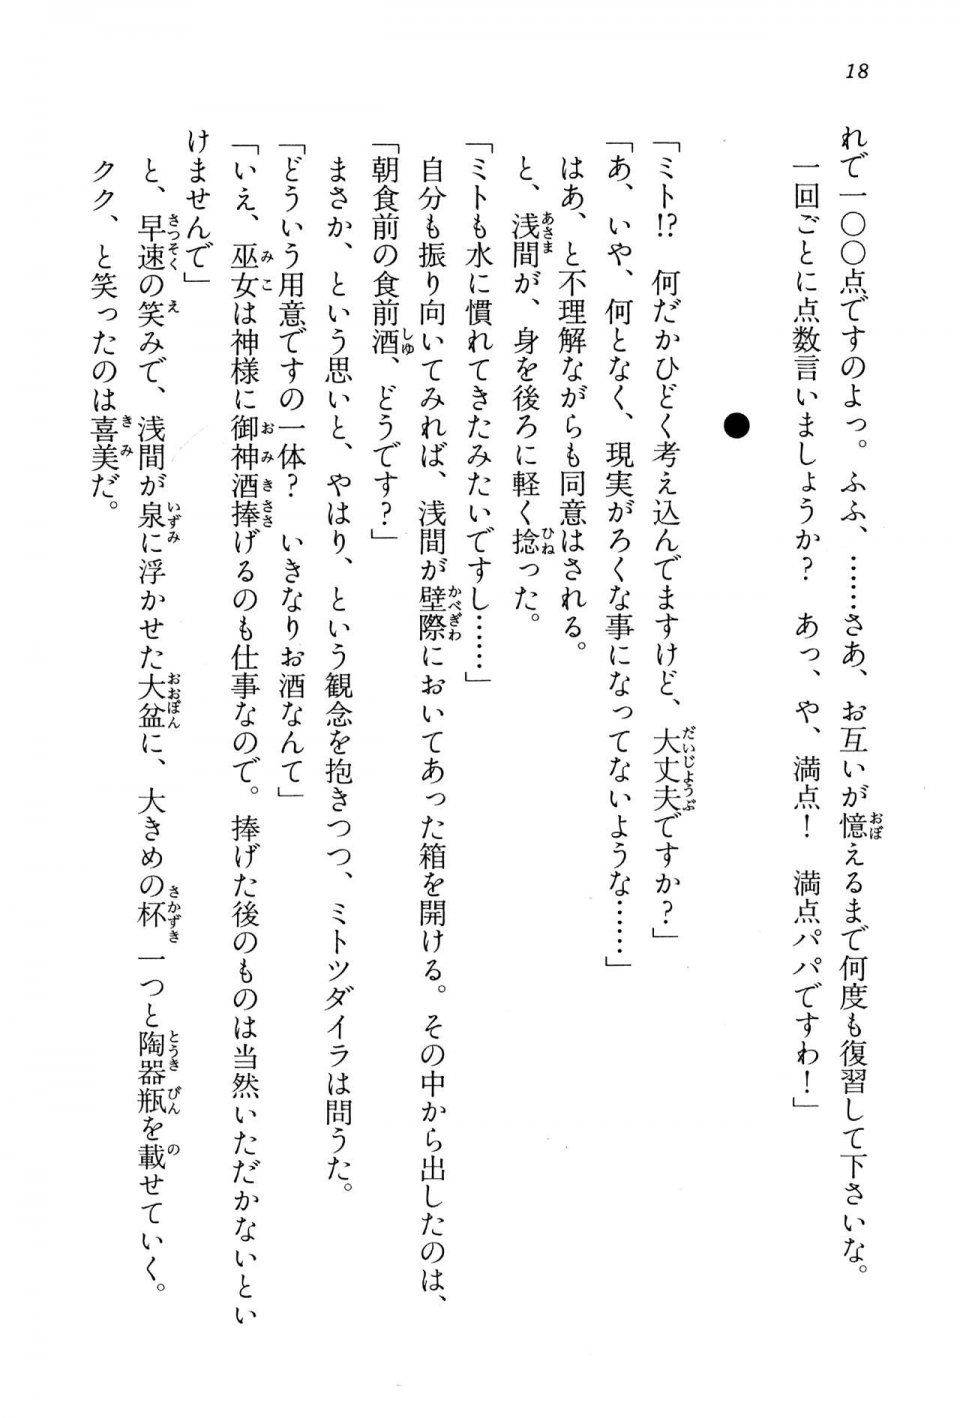 Kyoukai Senjou no Horizon BD Special Mininovel Vol 5(3A) - Photo #22